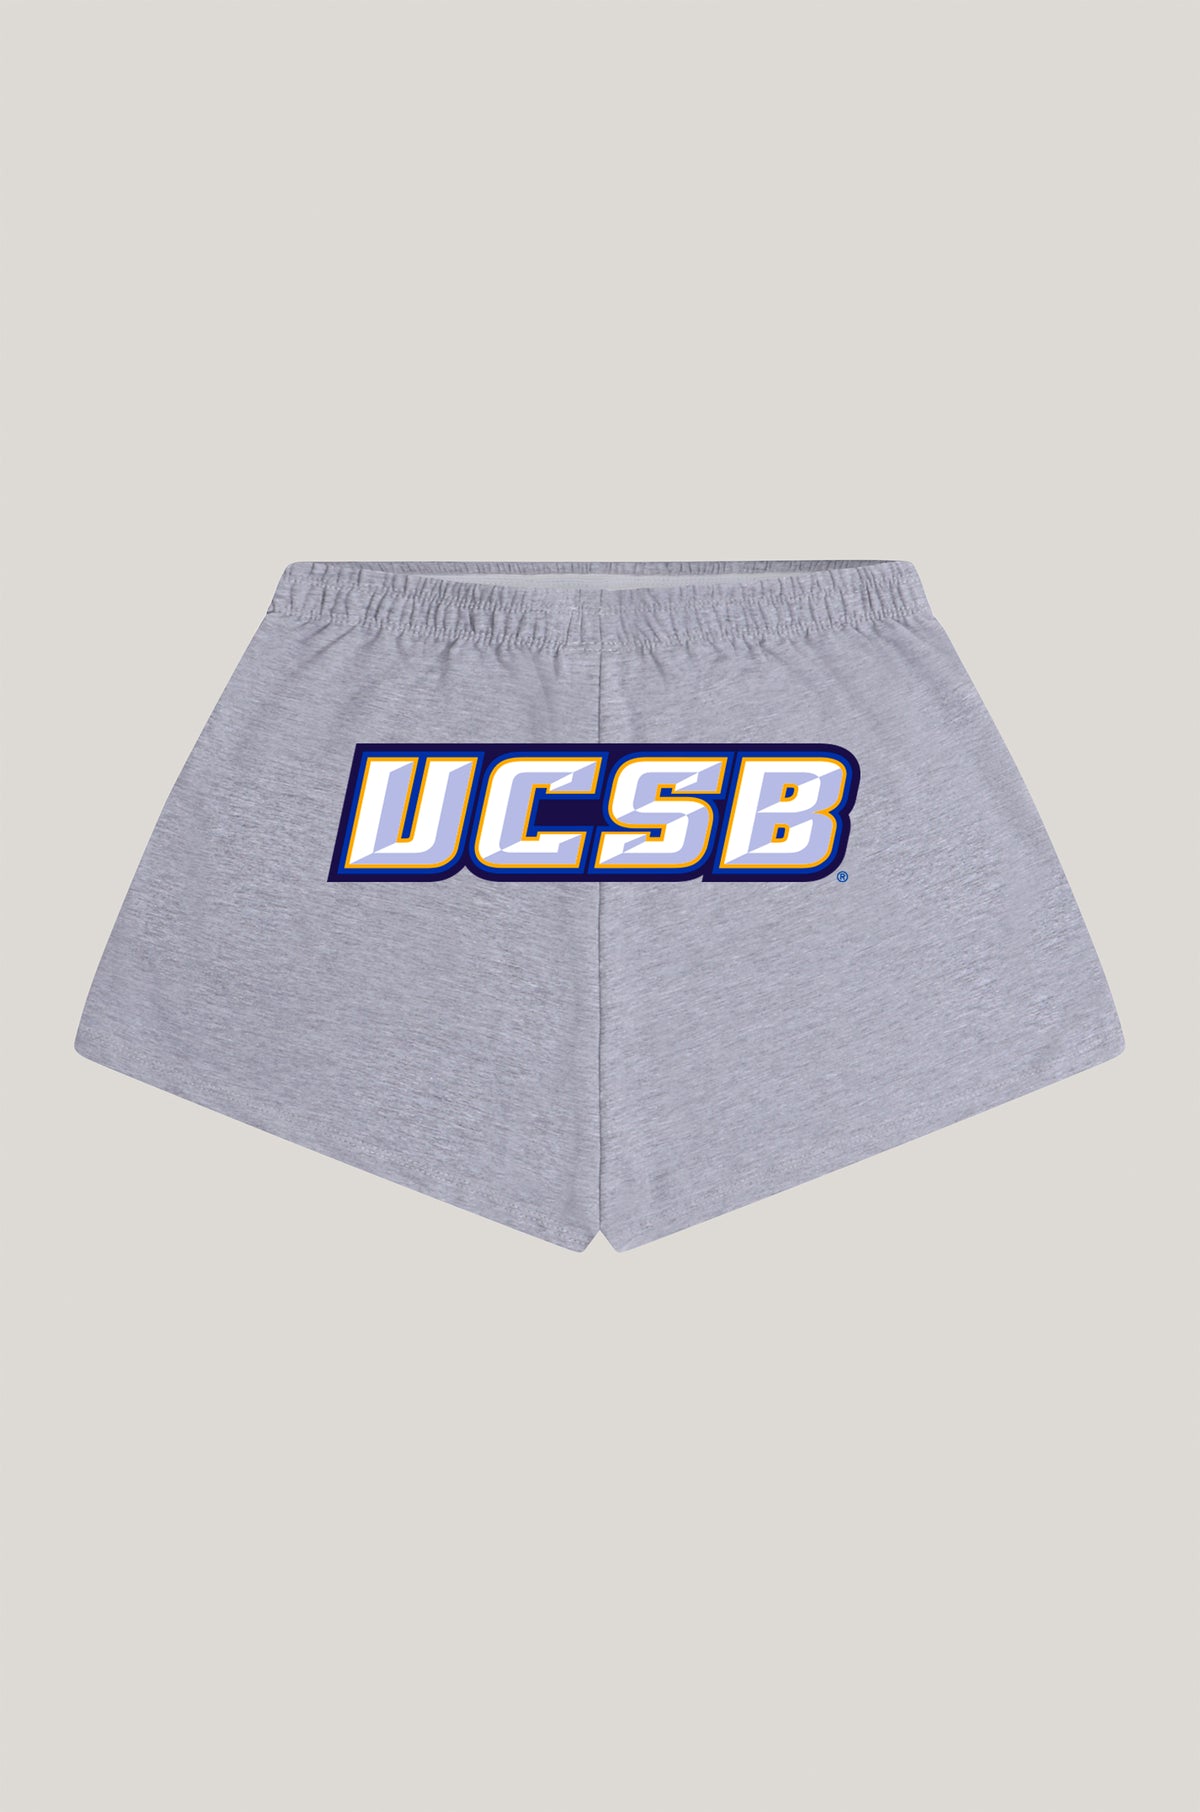 UCSB P.E. Shorts